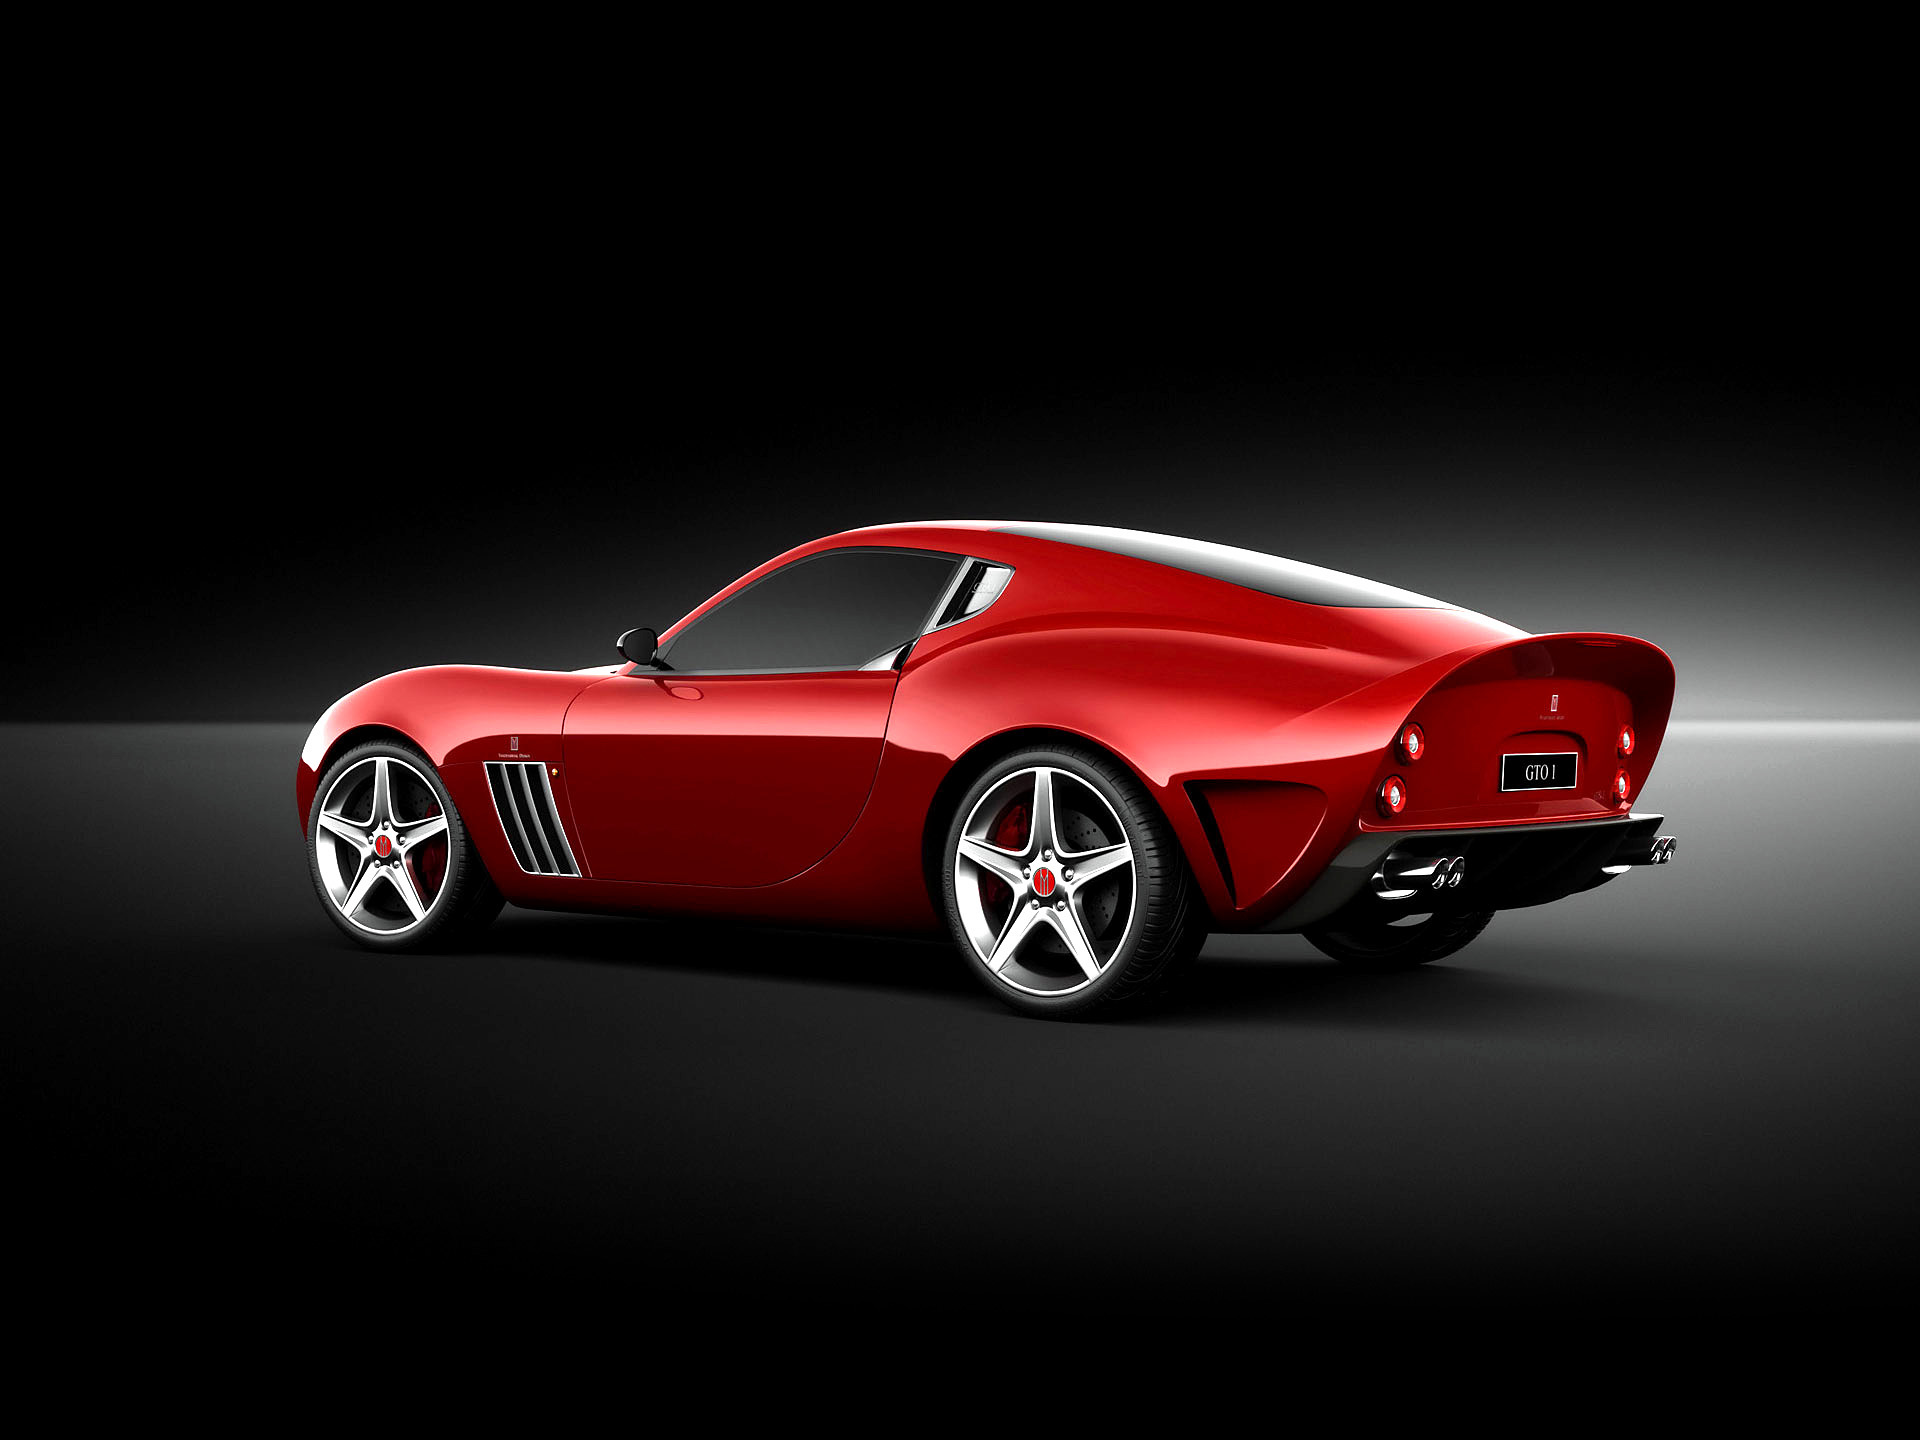  2007 Ferrari 599 GTO Vandenbrink Wallpaper.